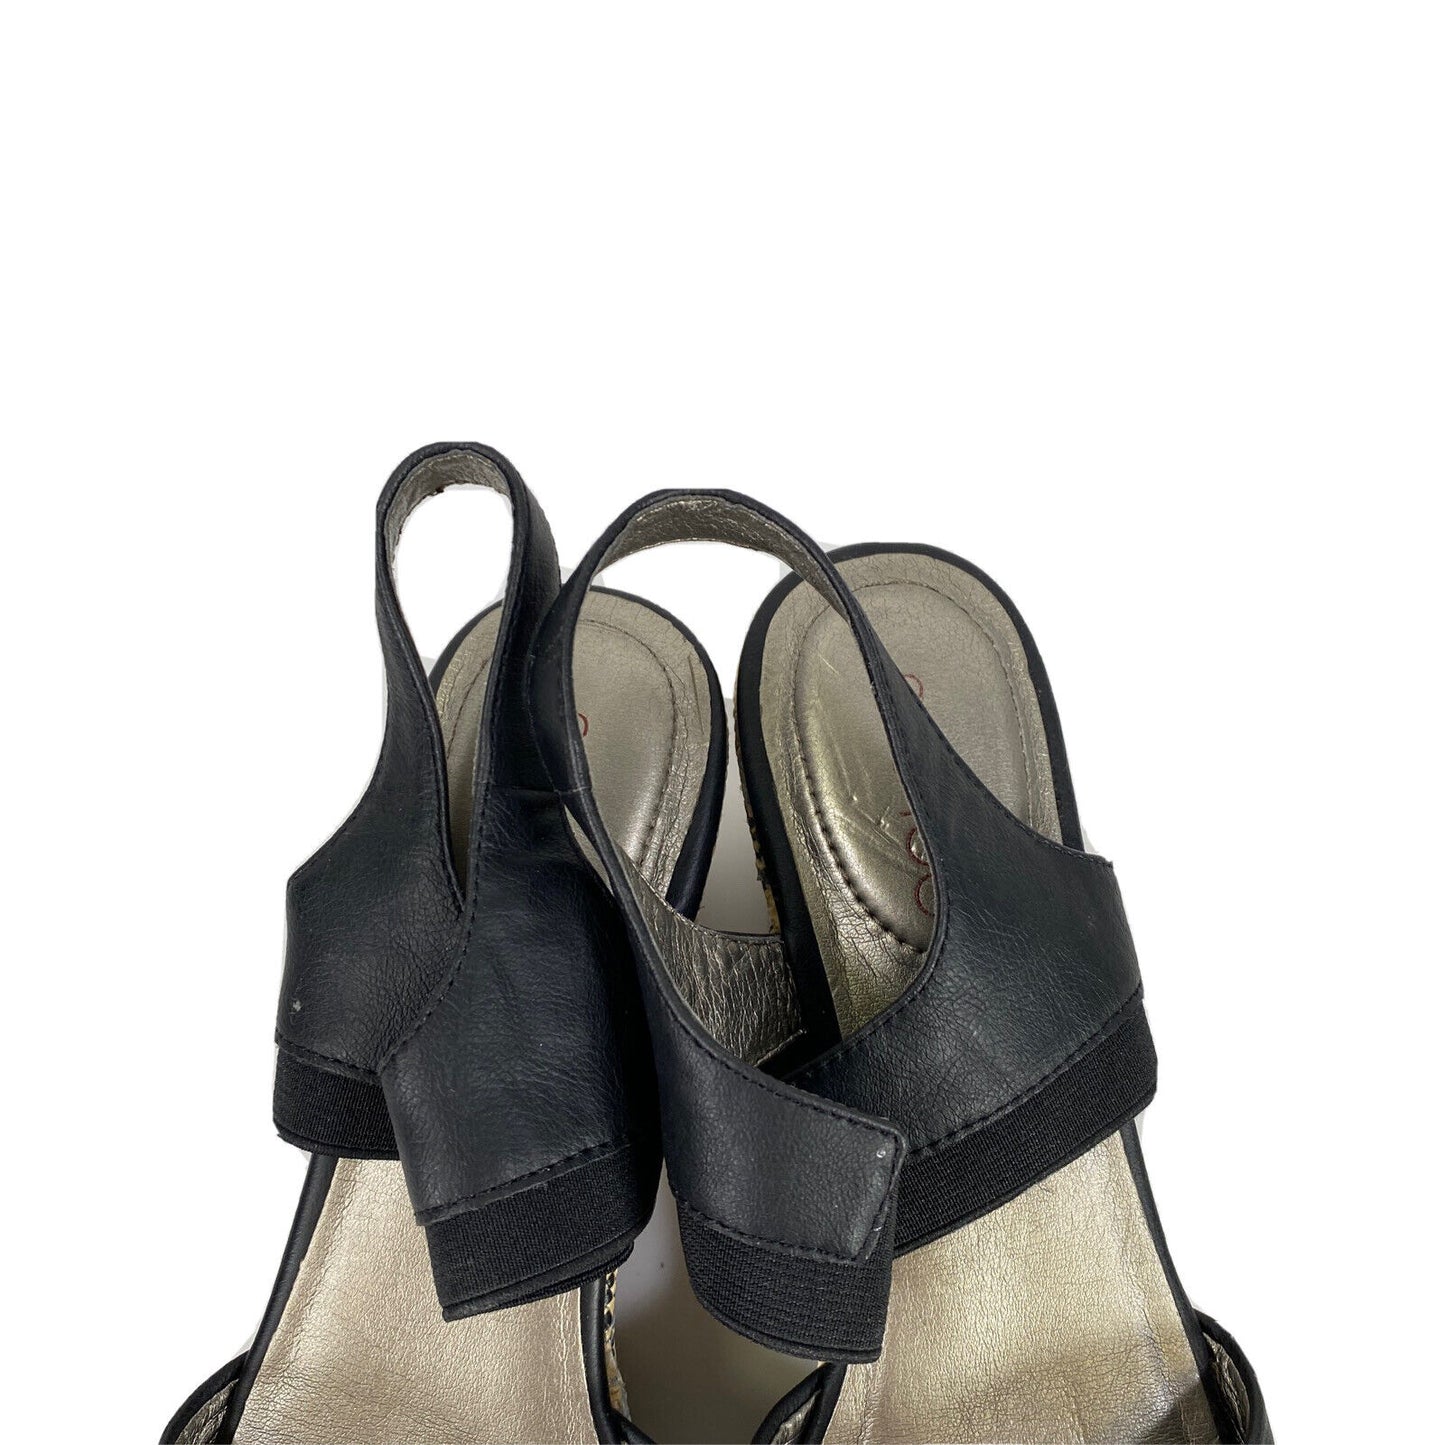 Me Too Women's Black Synthetic Platform Wedge Sandals - 8 M